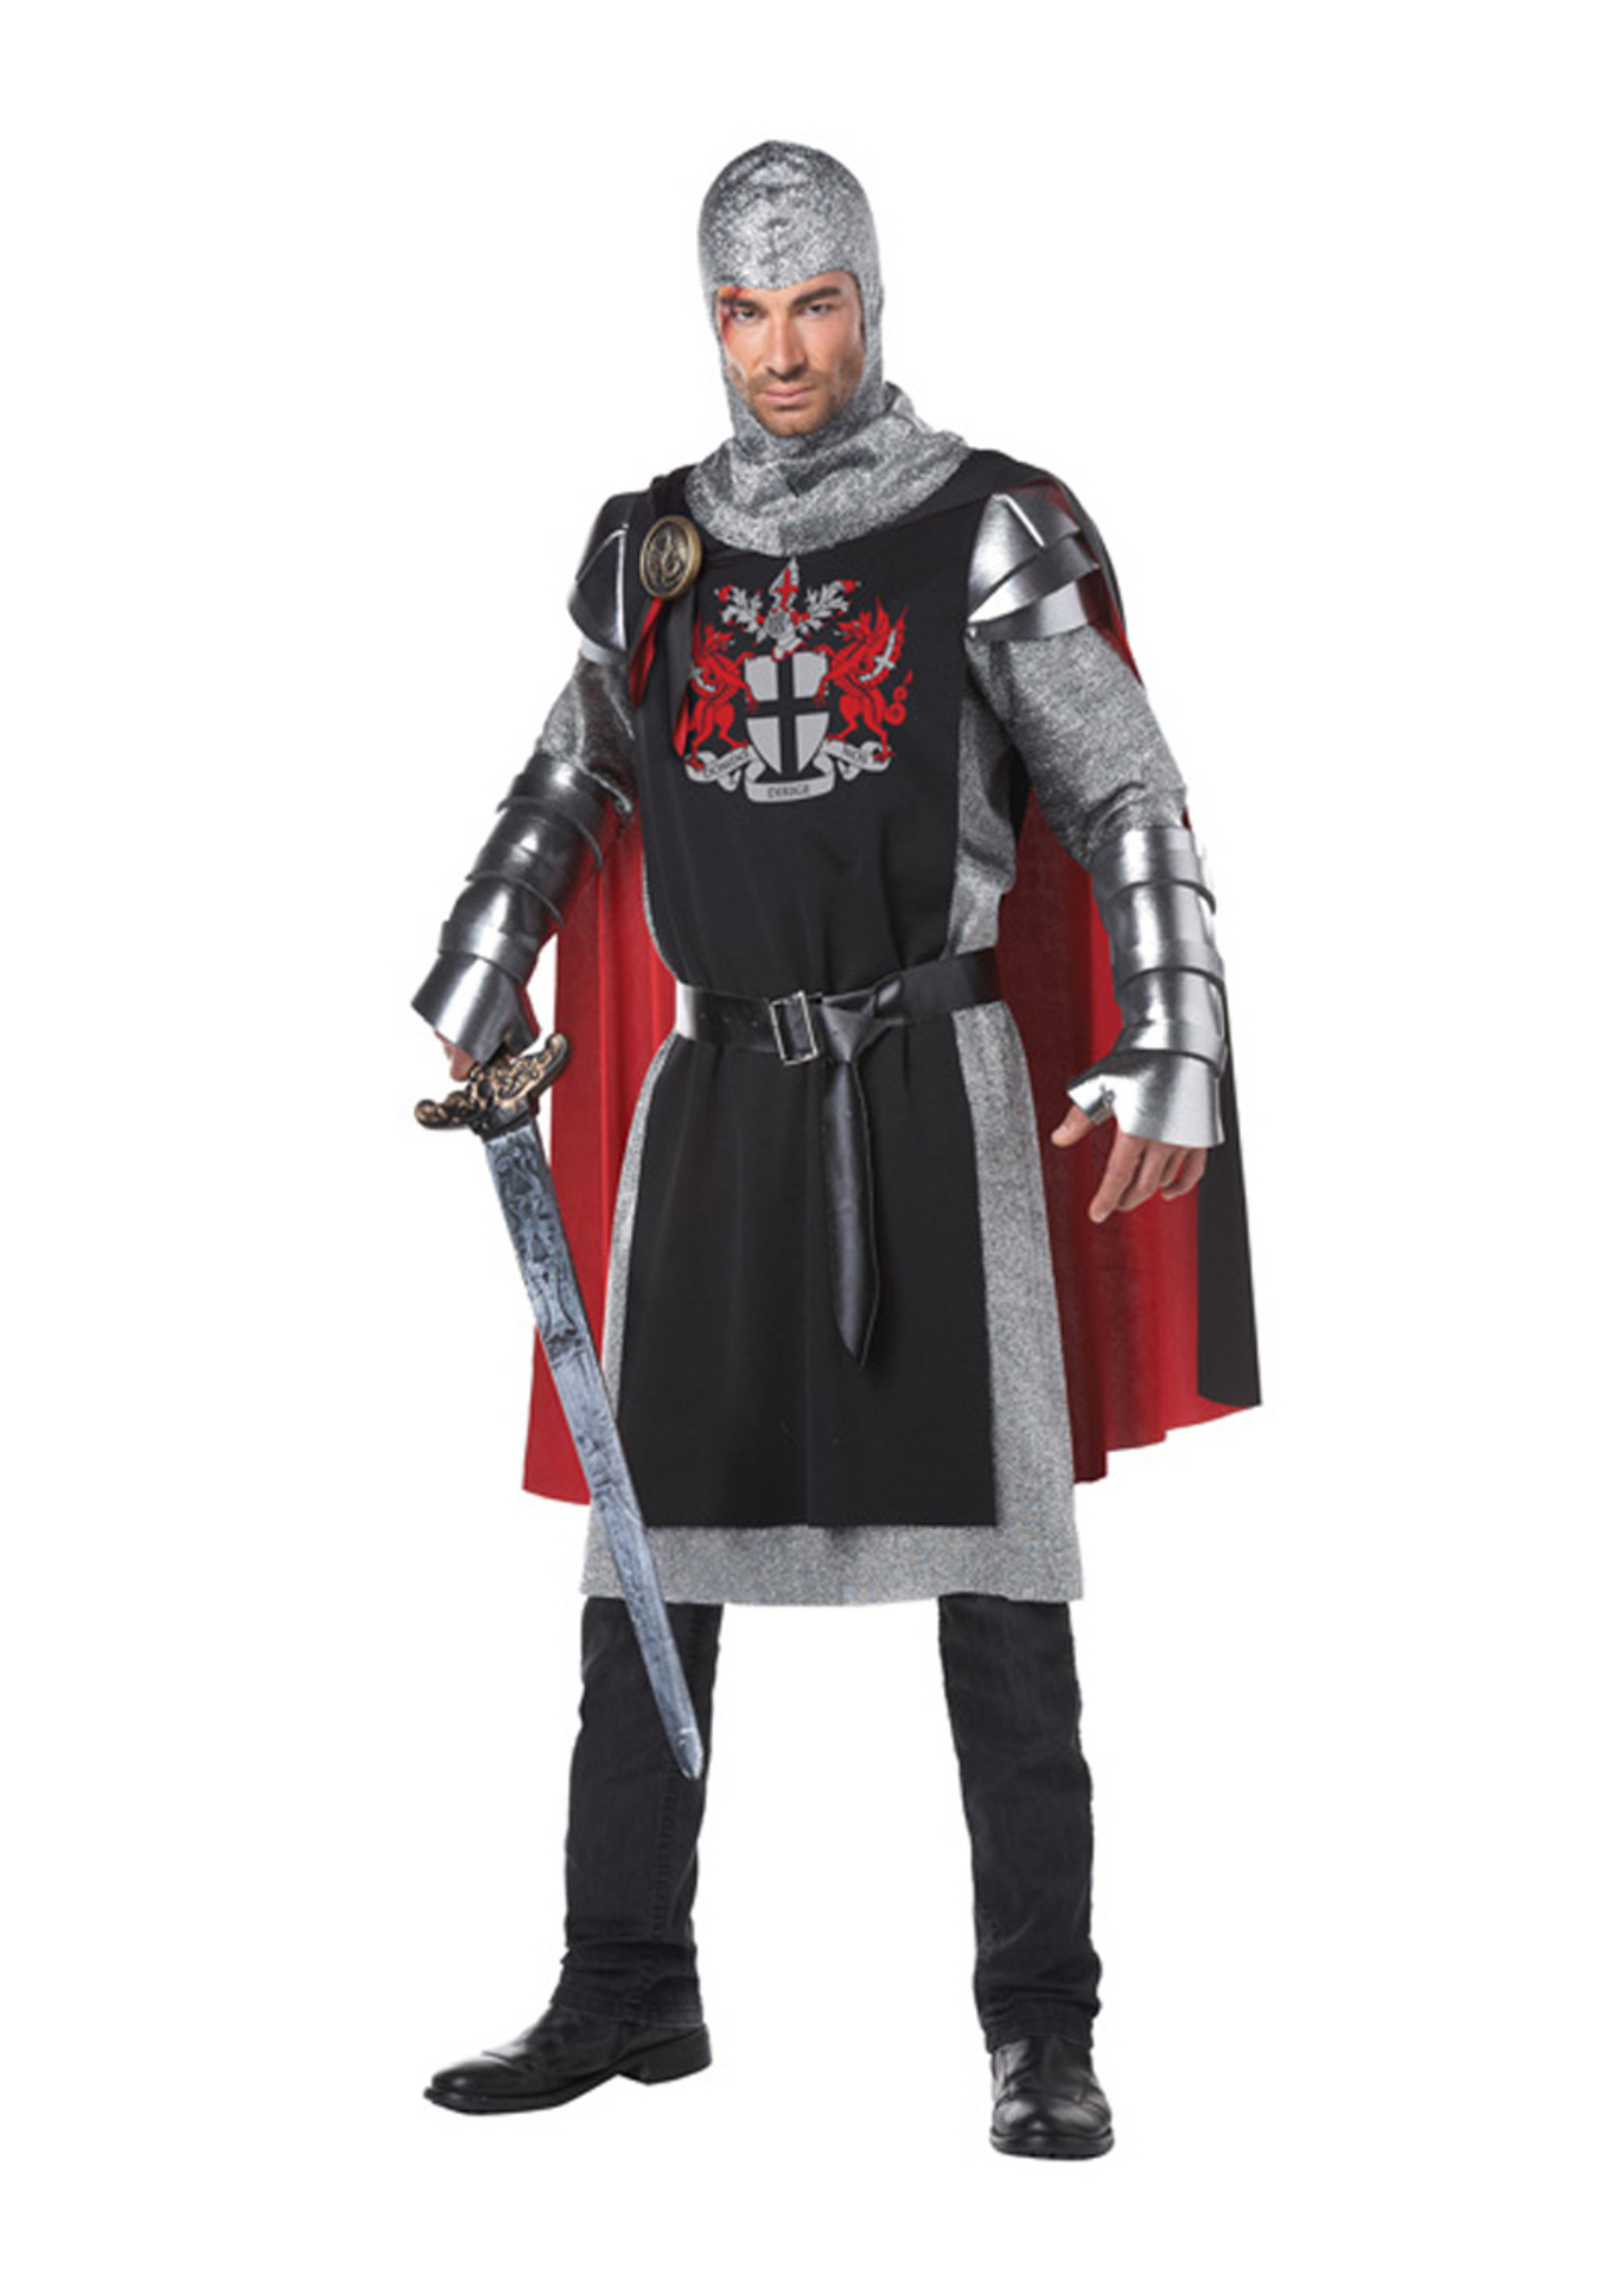 Medieval Knight Costume - Men's